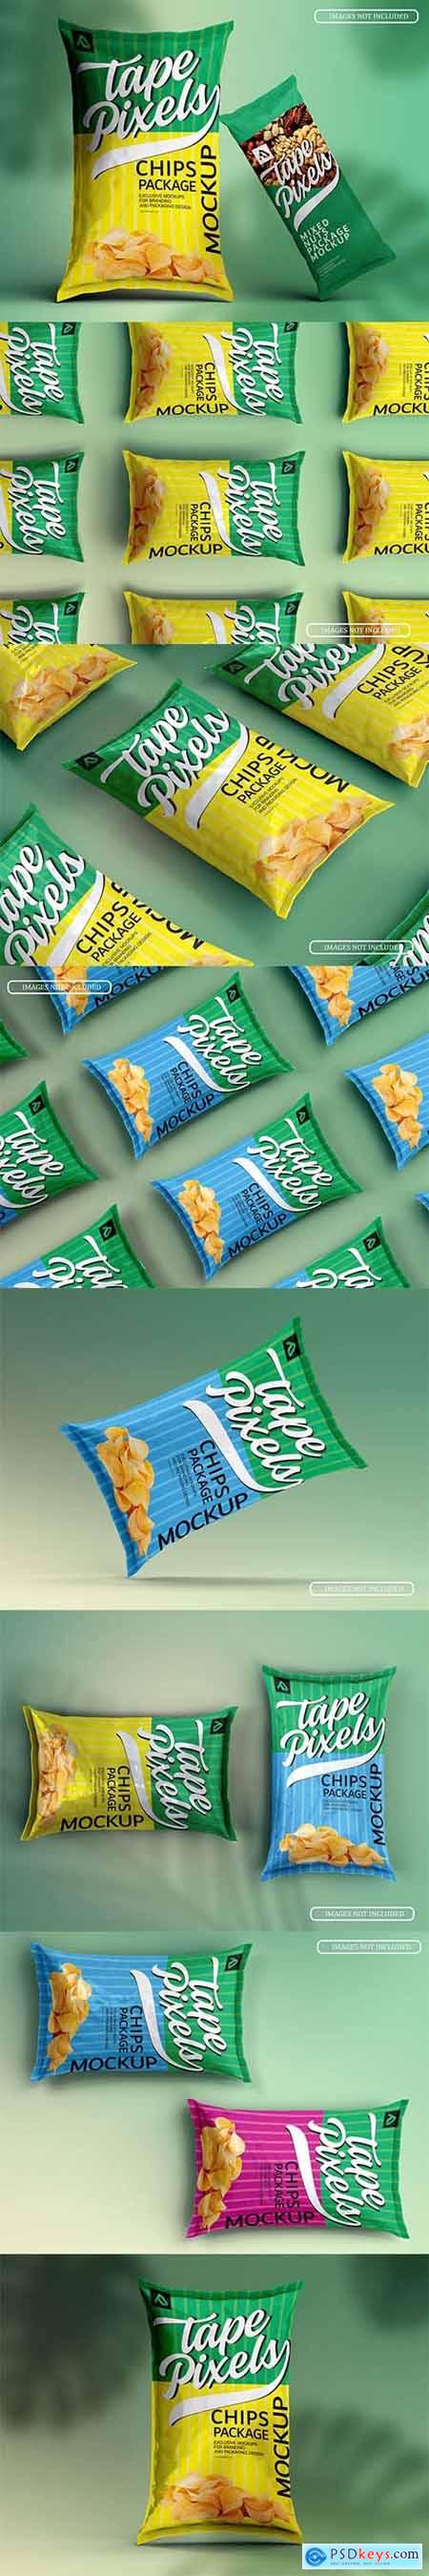 lying potato chips bags mockup